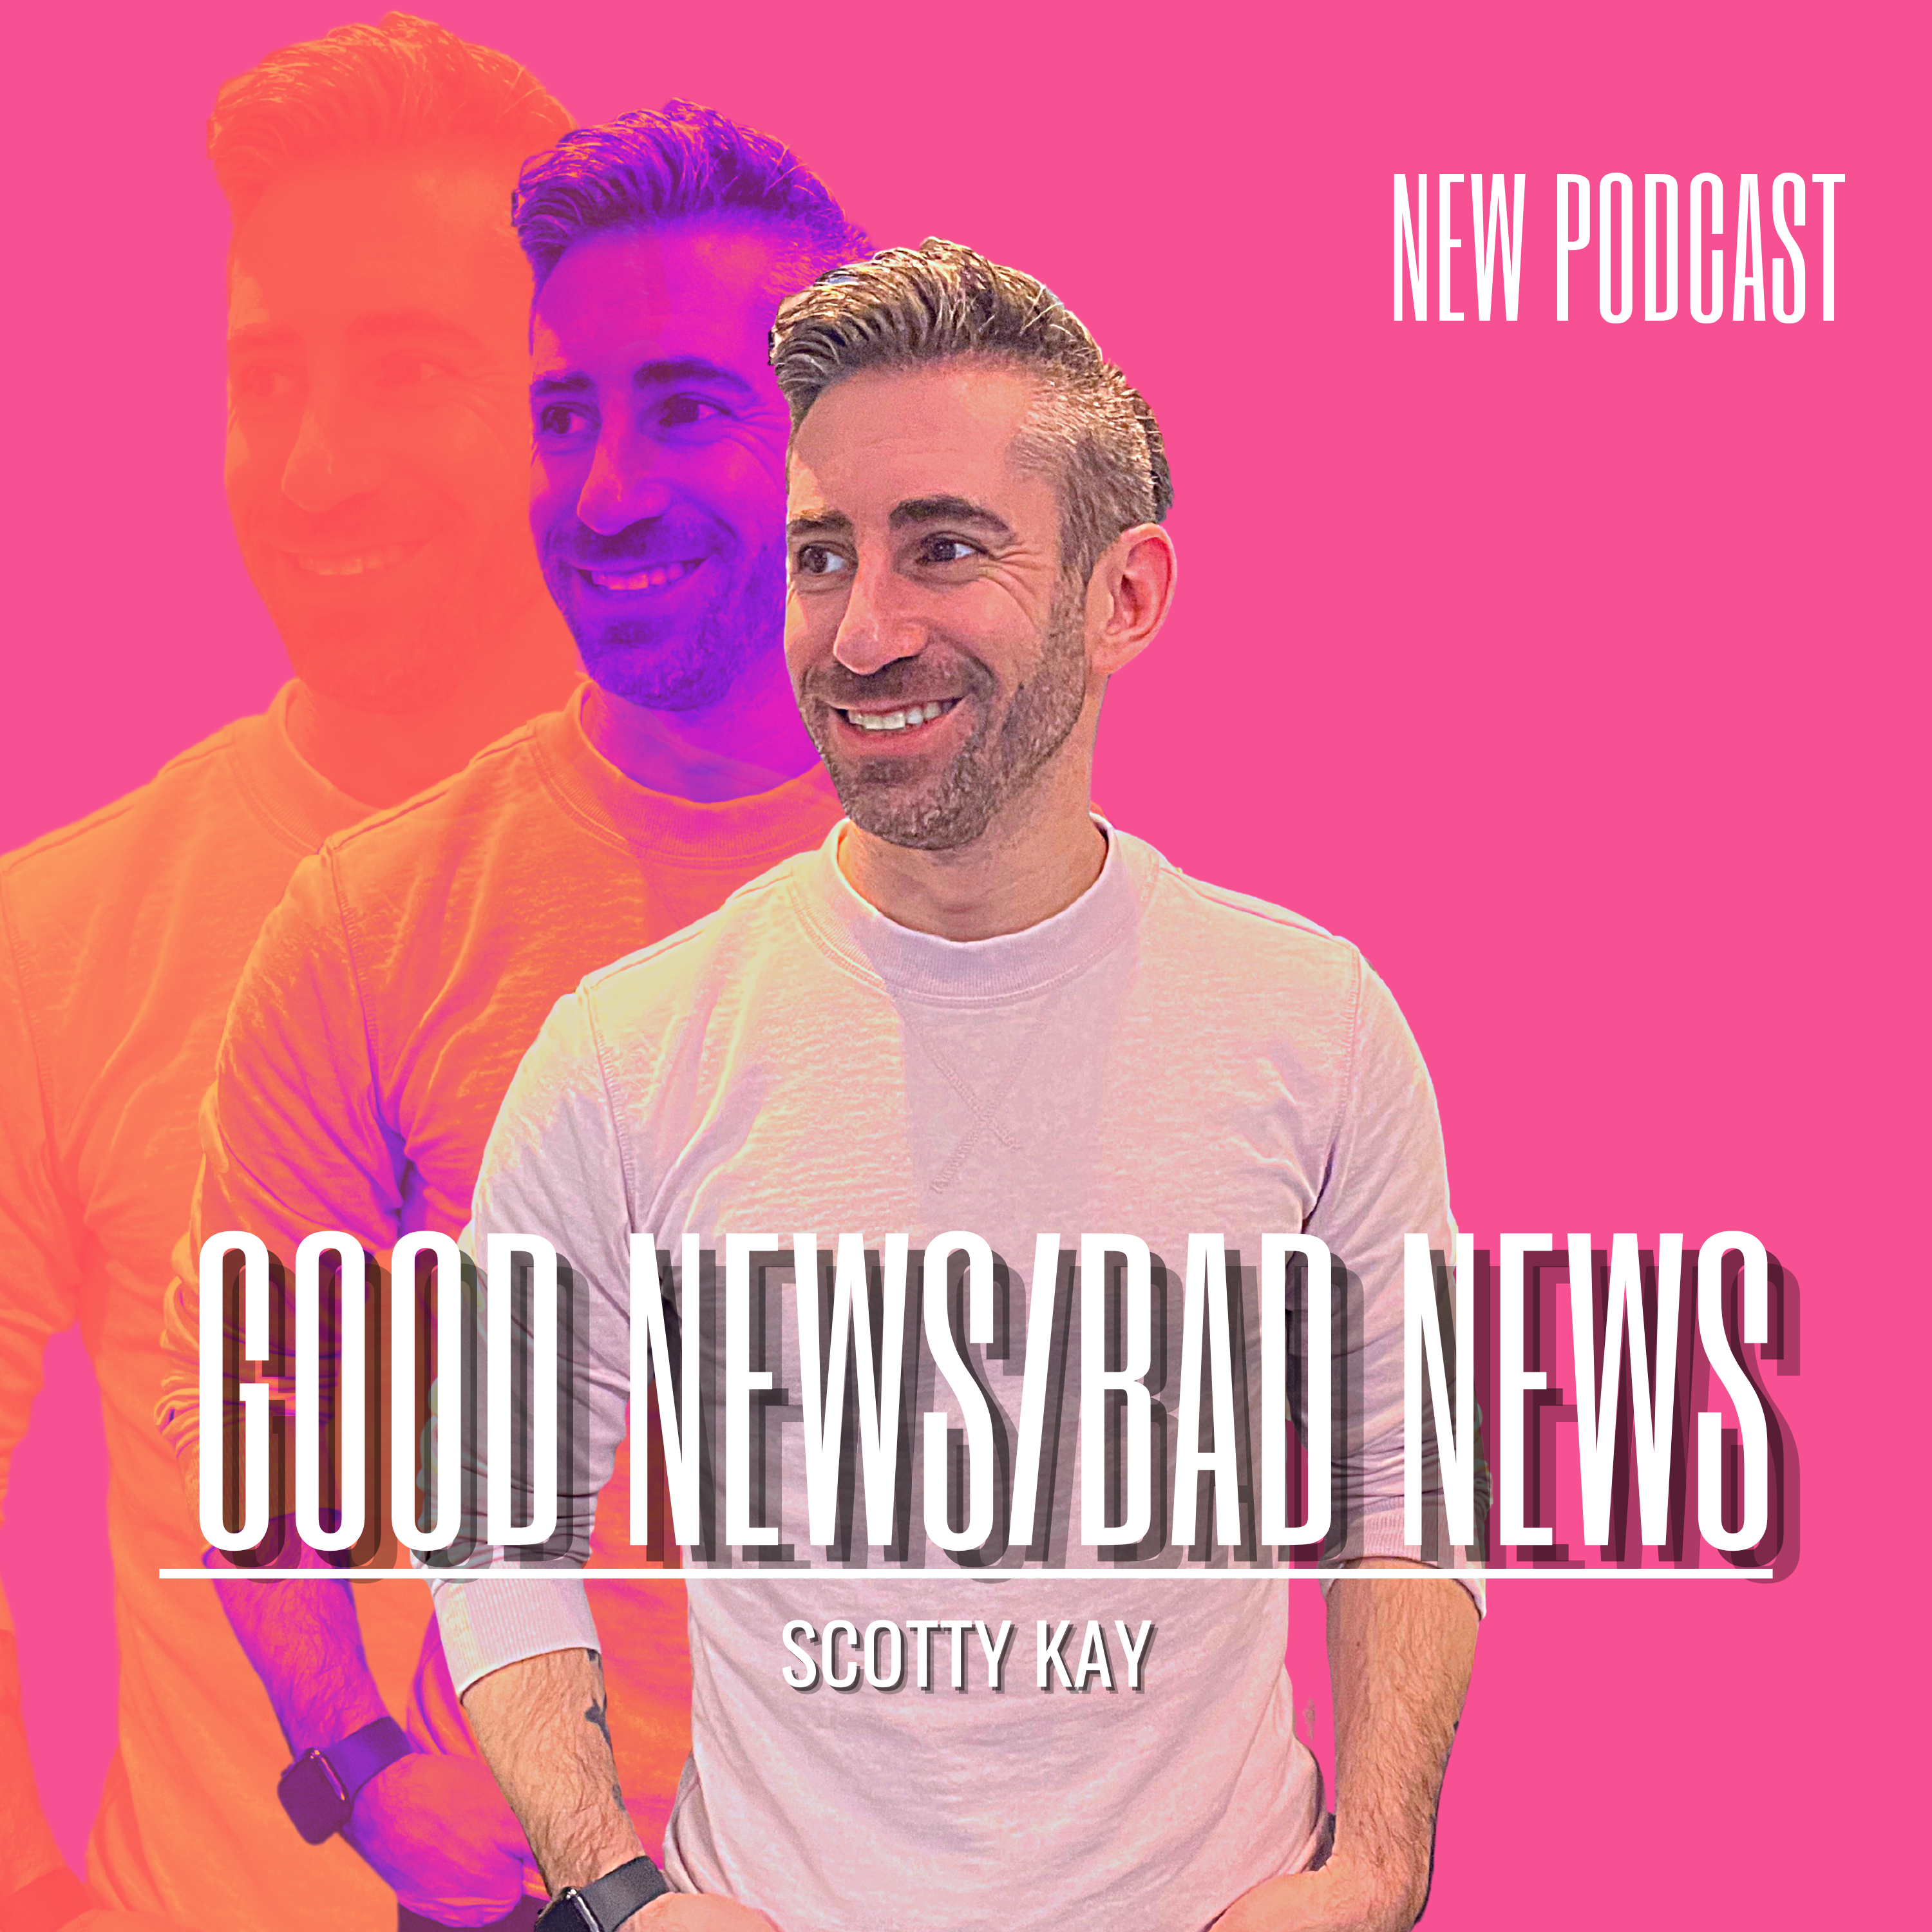 GOOD NEWS/BAD NEWS - THE FACEBOOK JUDGE